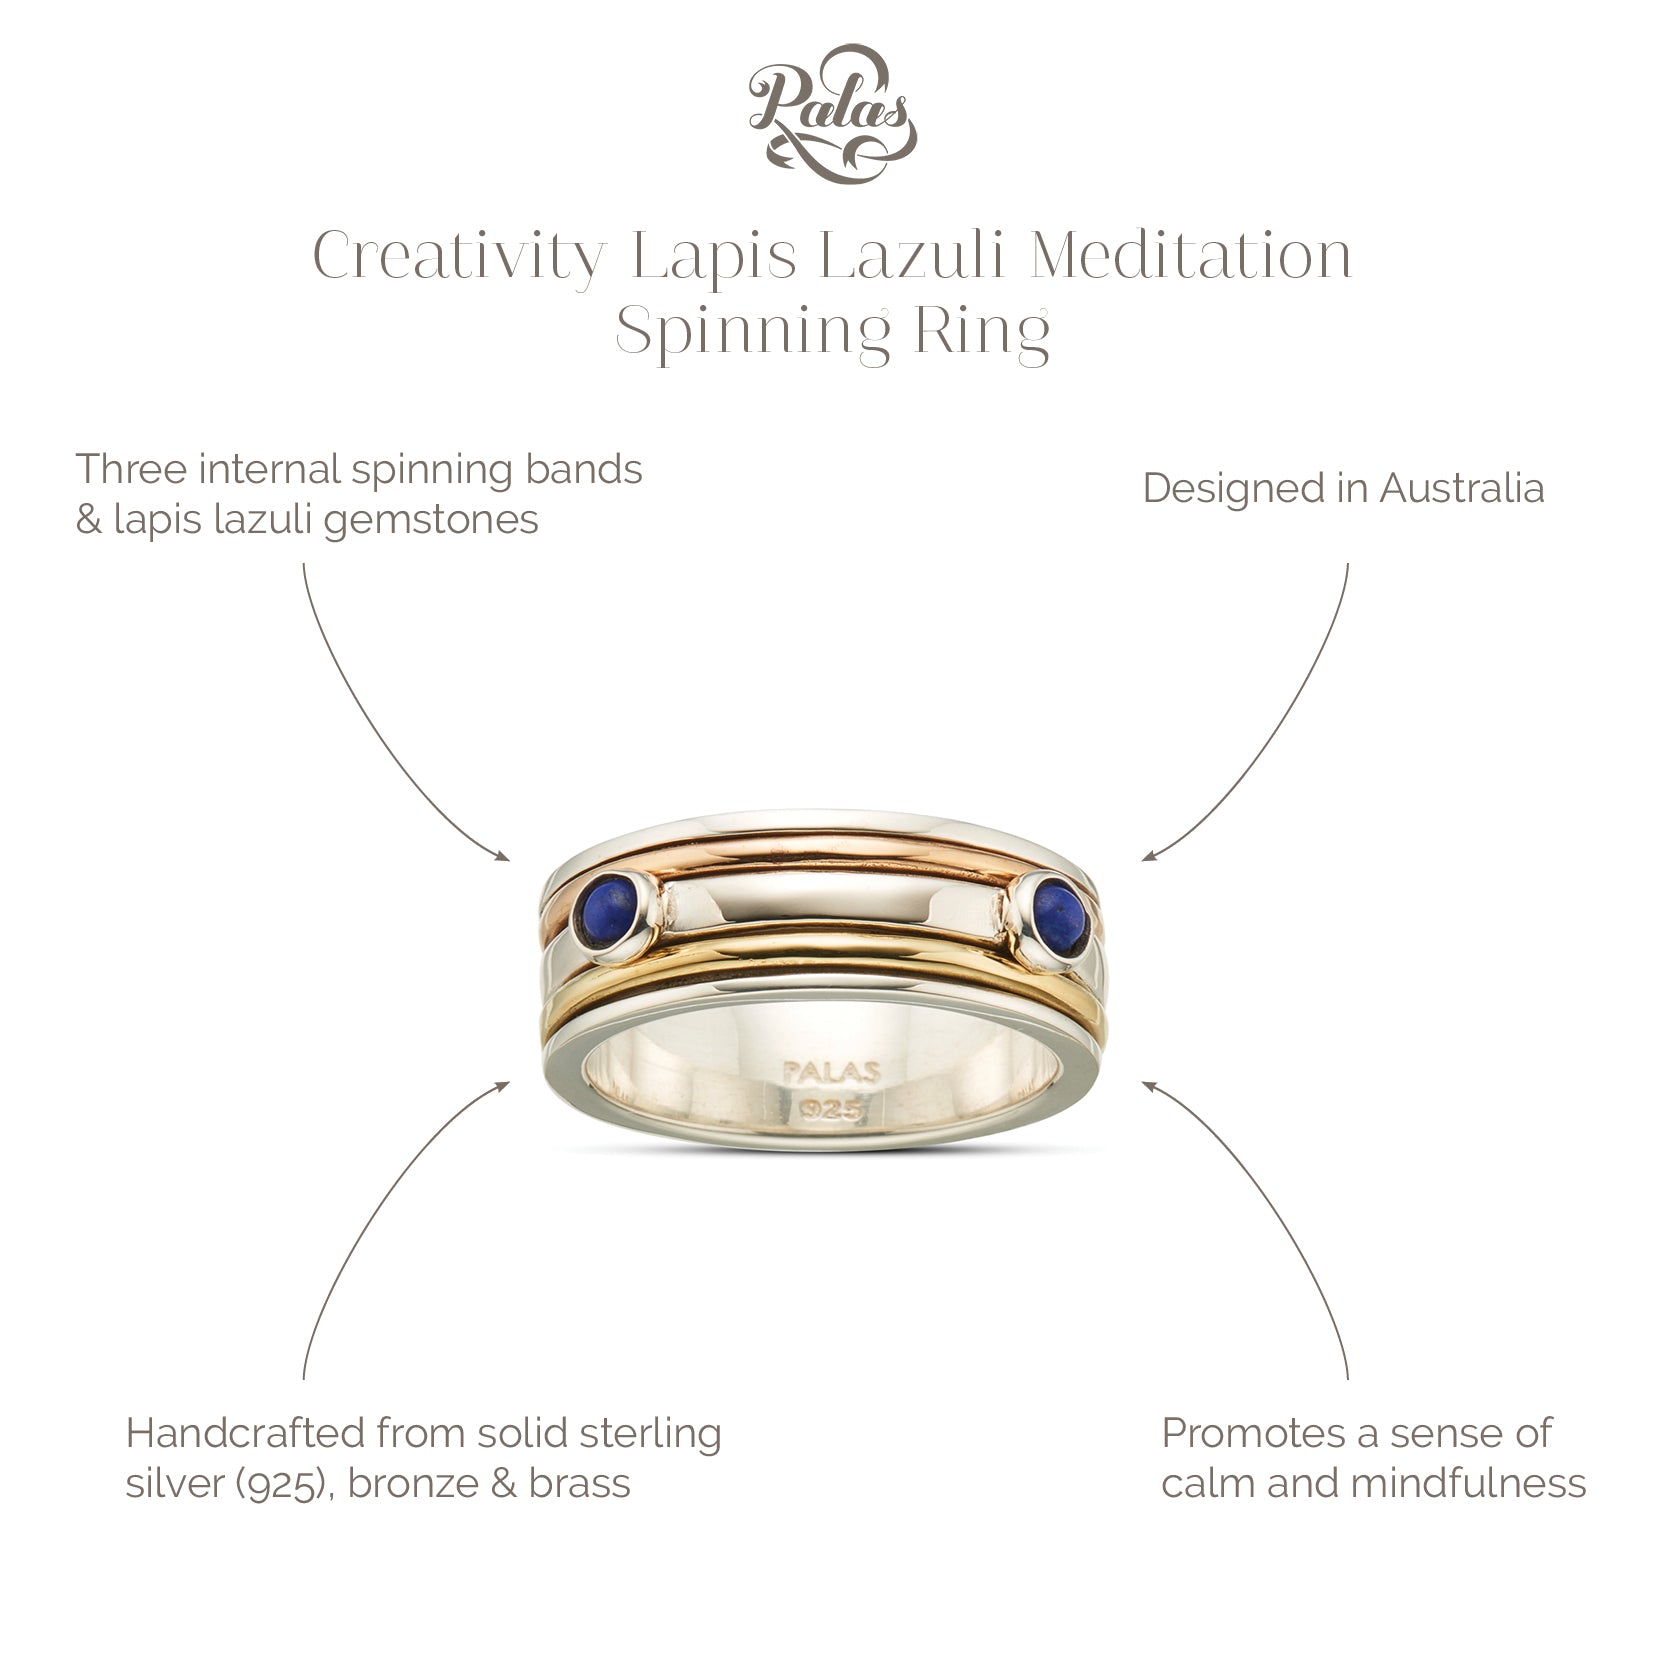 Creativity lapis lazuli meditation spinning ring